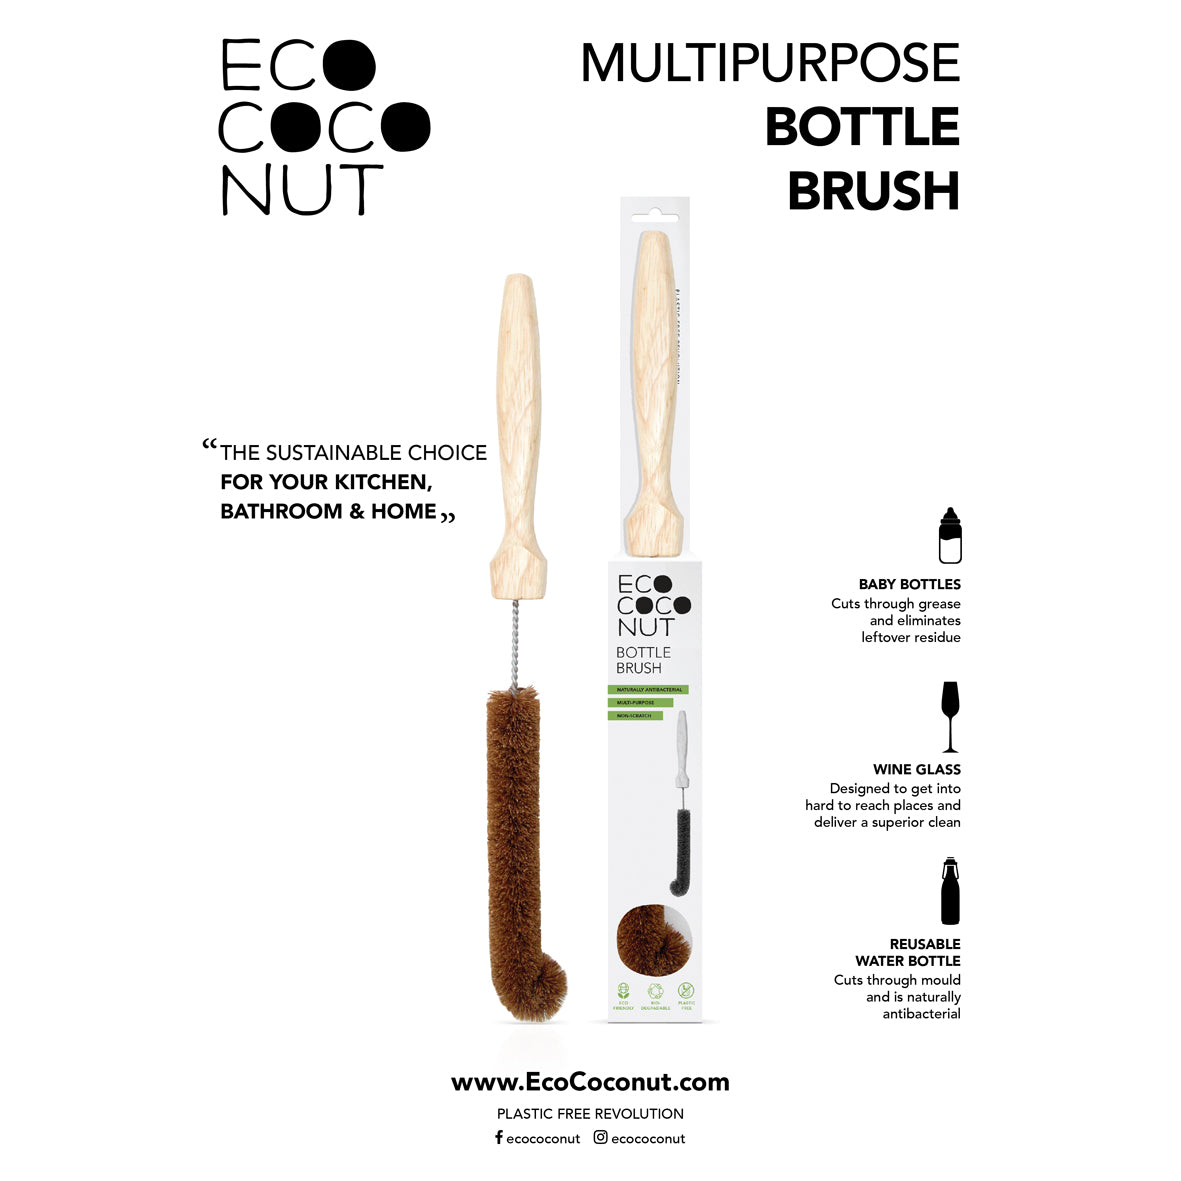 Ecococonut bottle brush 